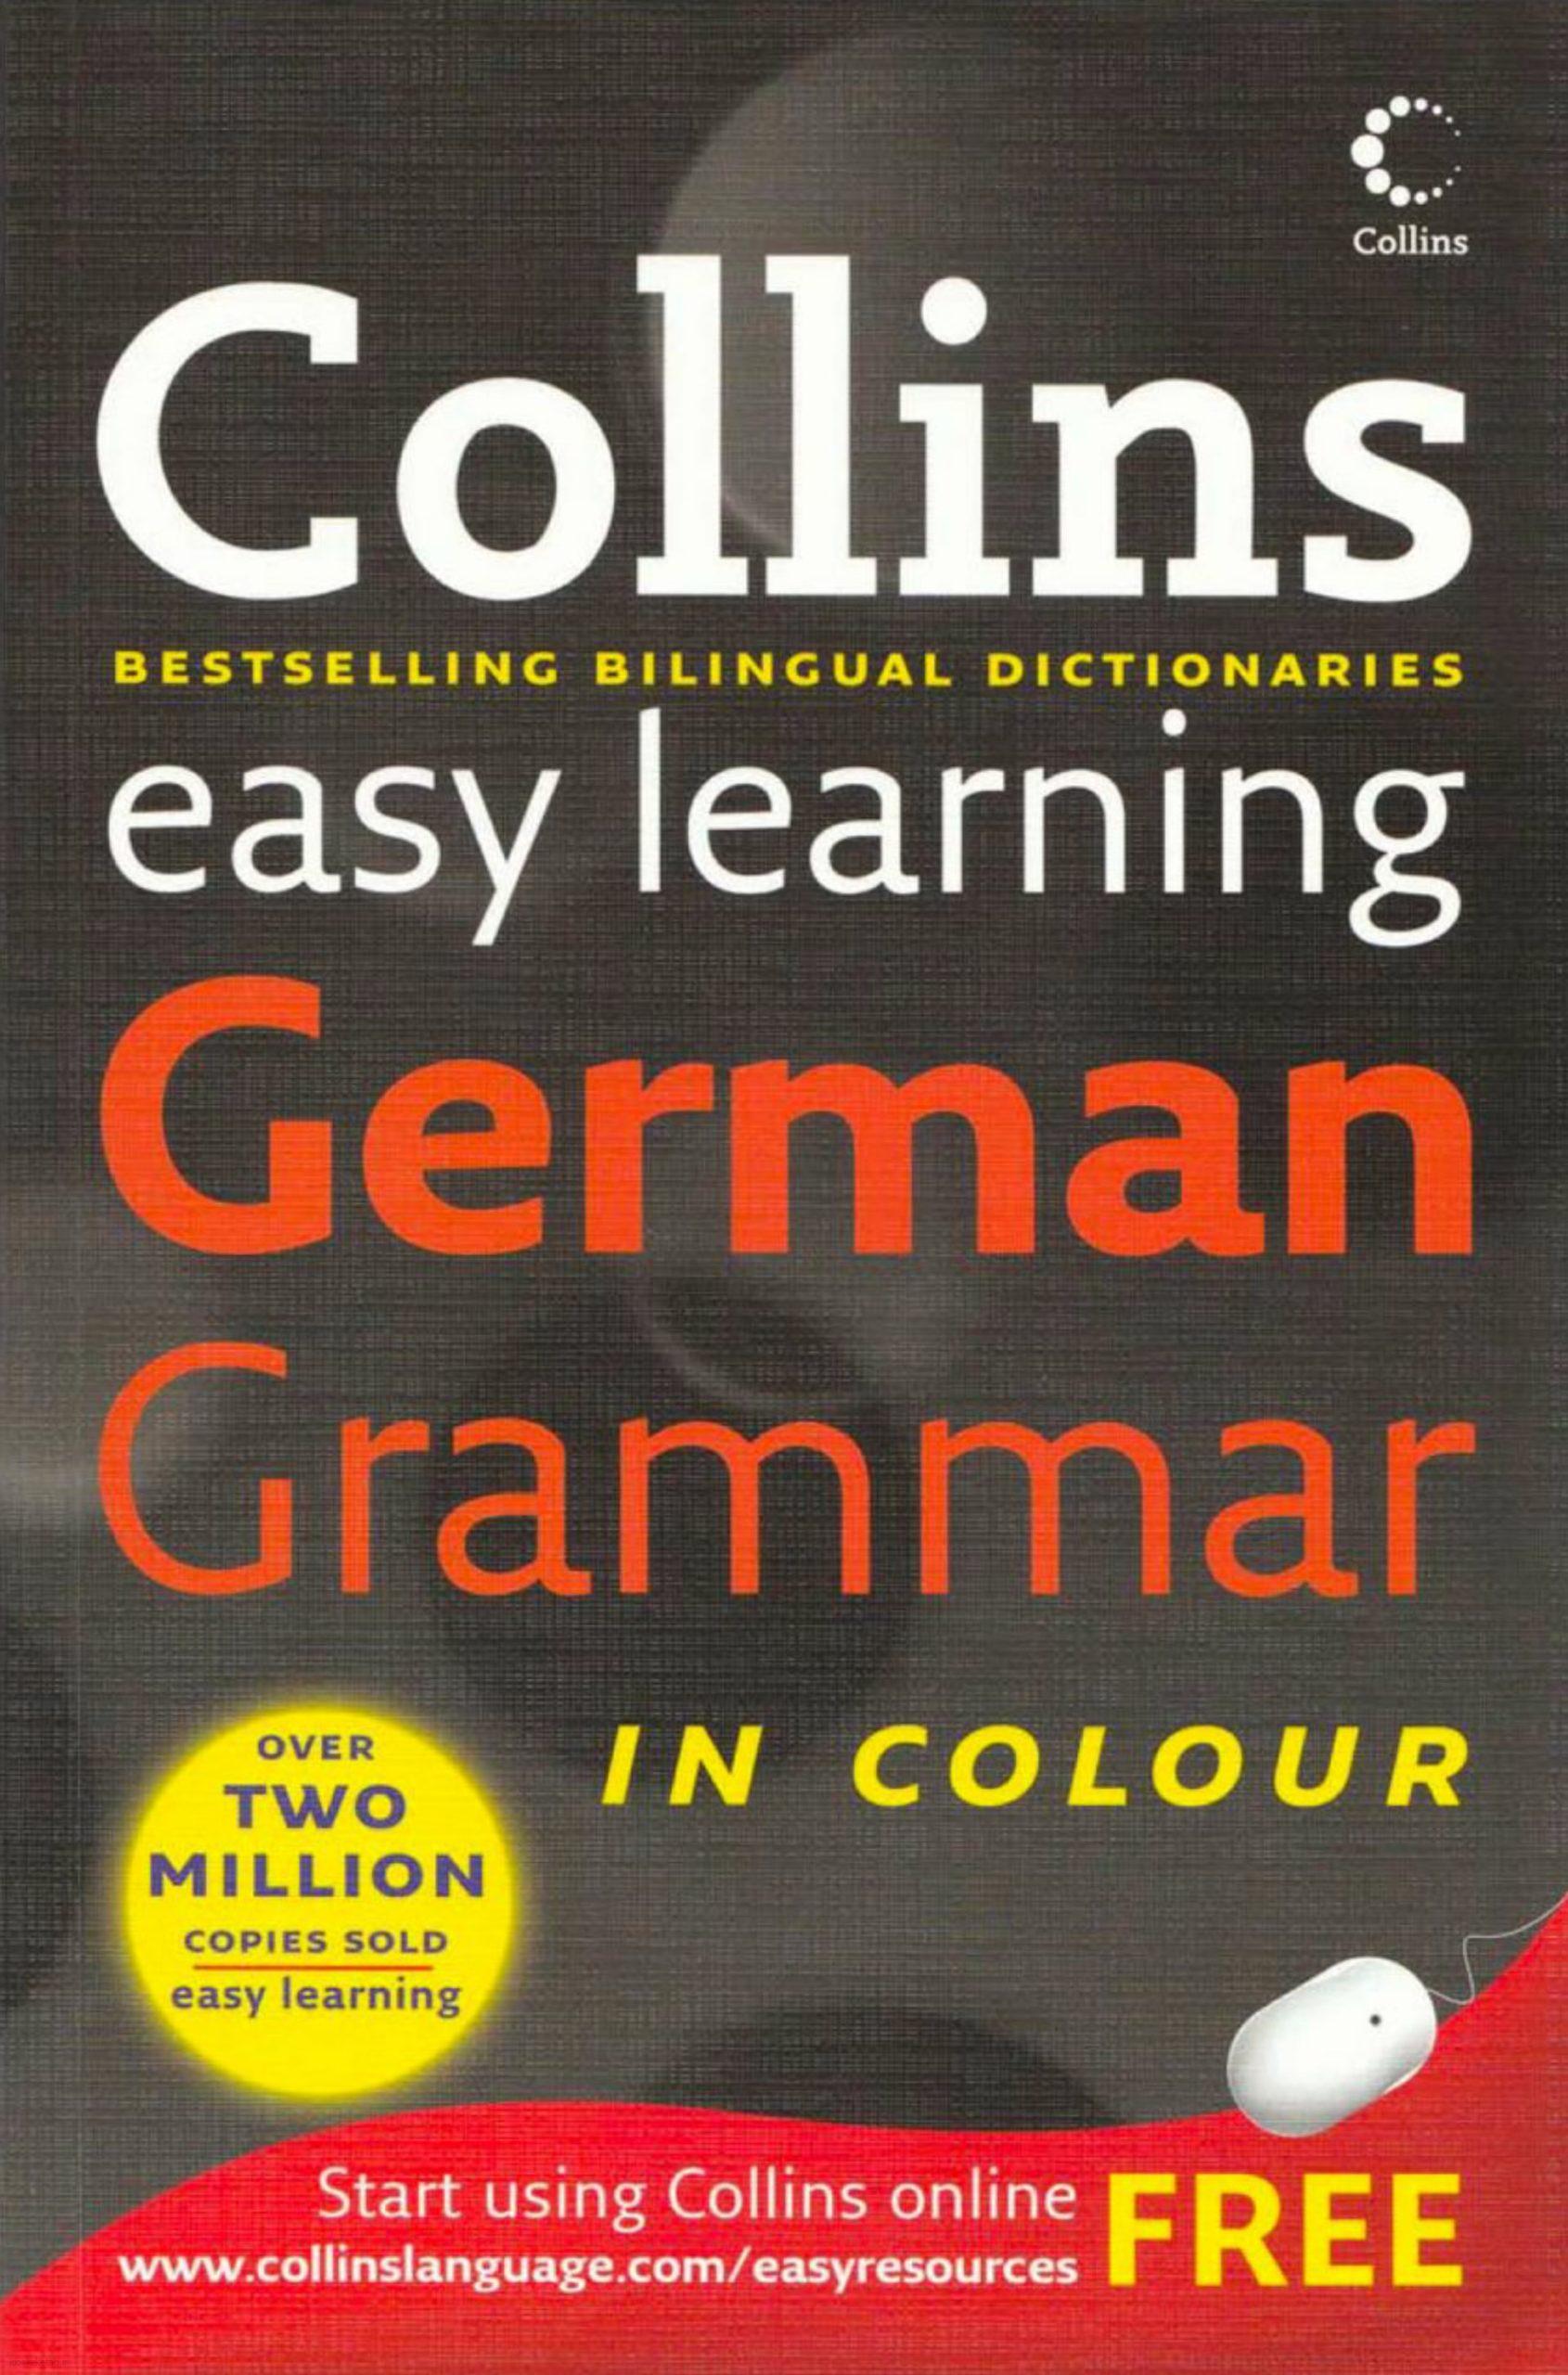 دانلود کتاب آلمانی cillins easy learning german grammar